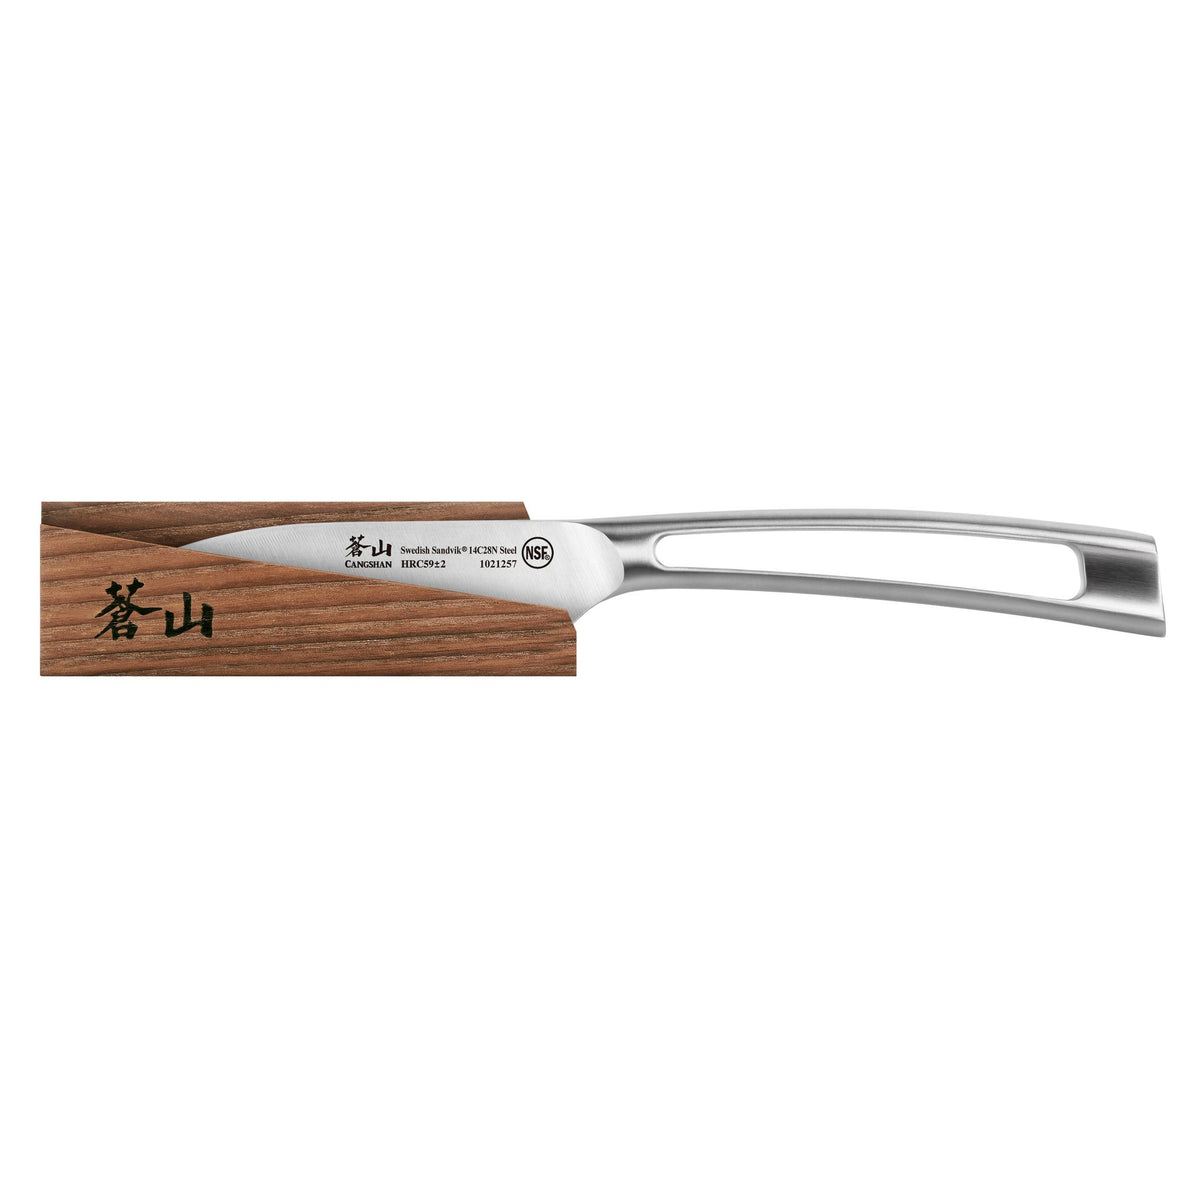 with Cutlery 14C2 Series Company Cangshan TN1 – 3.5-Inch Sheath, Swedish Forged Wood Knife Paring